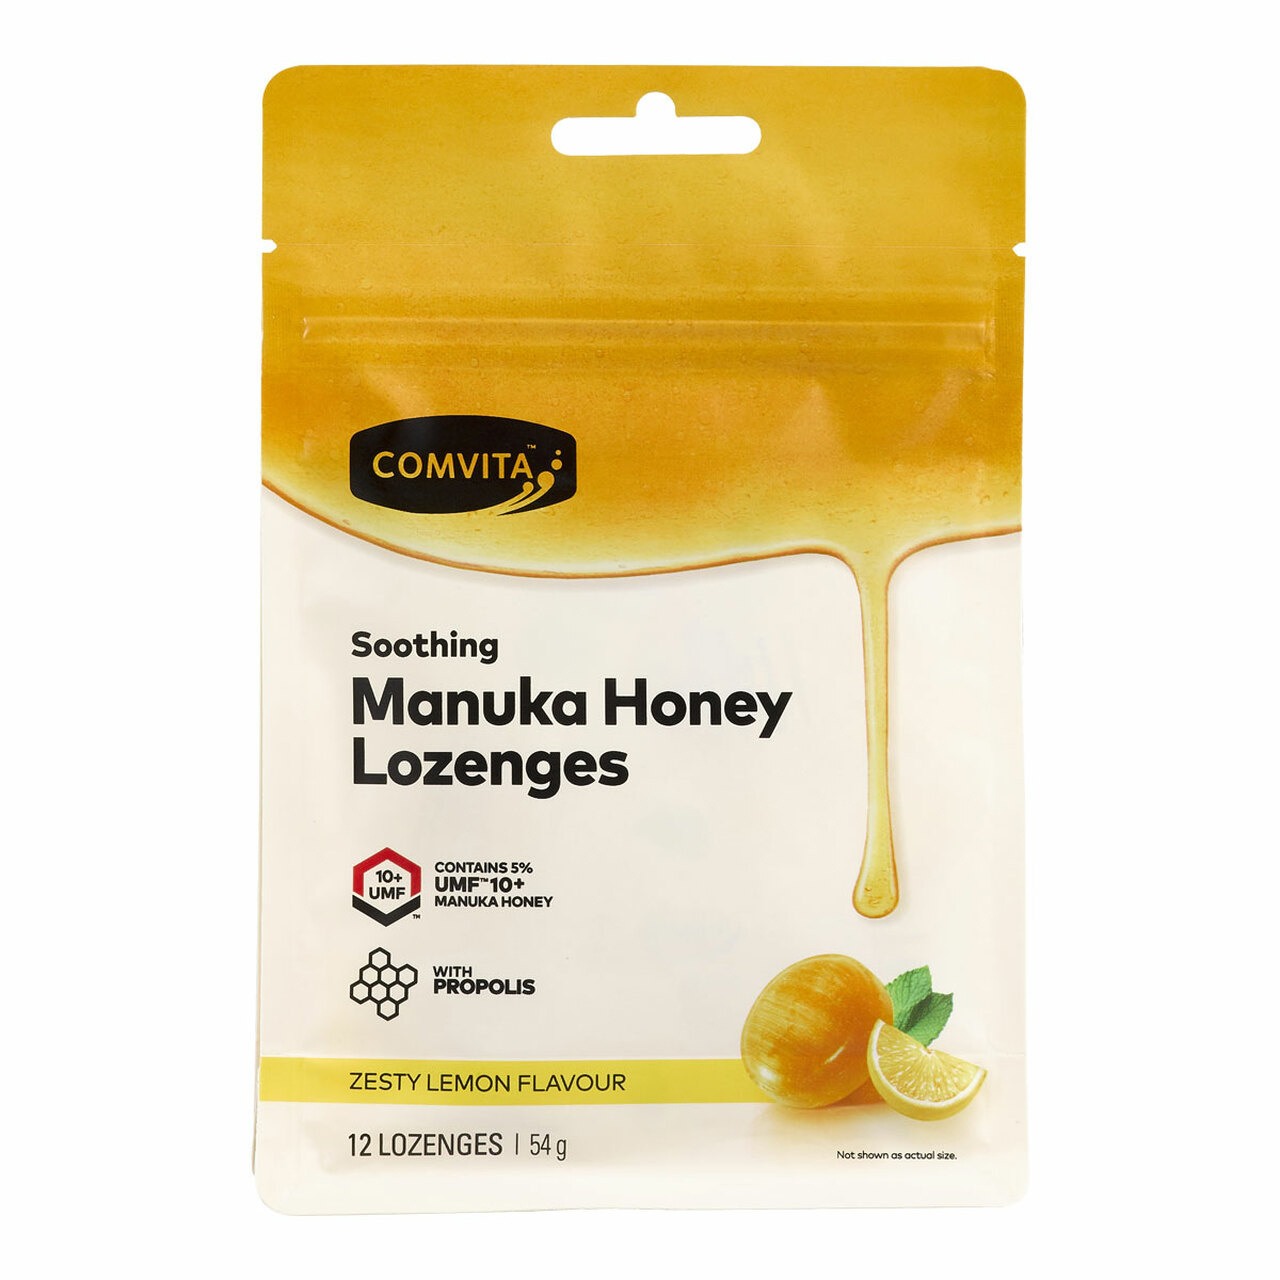 Comvita Manuka Honey Lozenges Zesty Lemon Flavour - 12 Pack